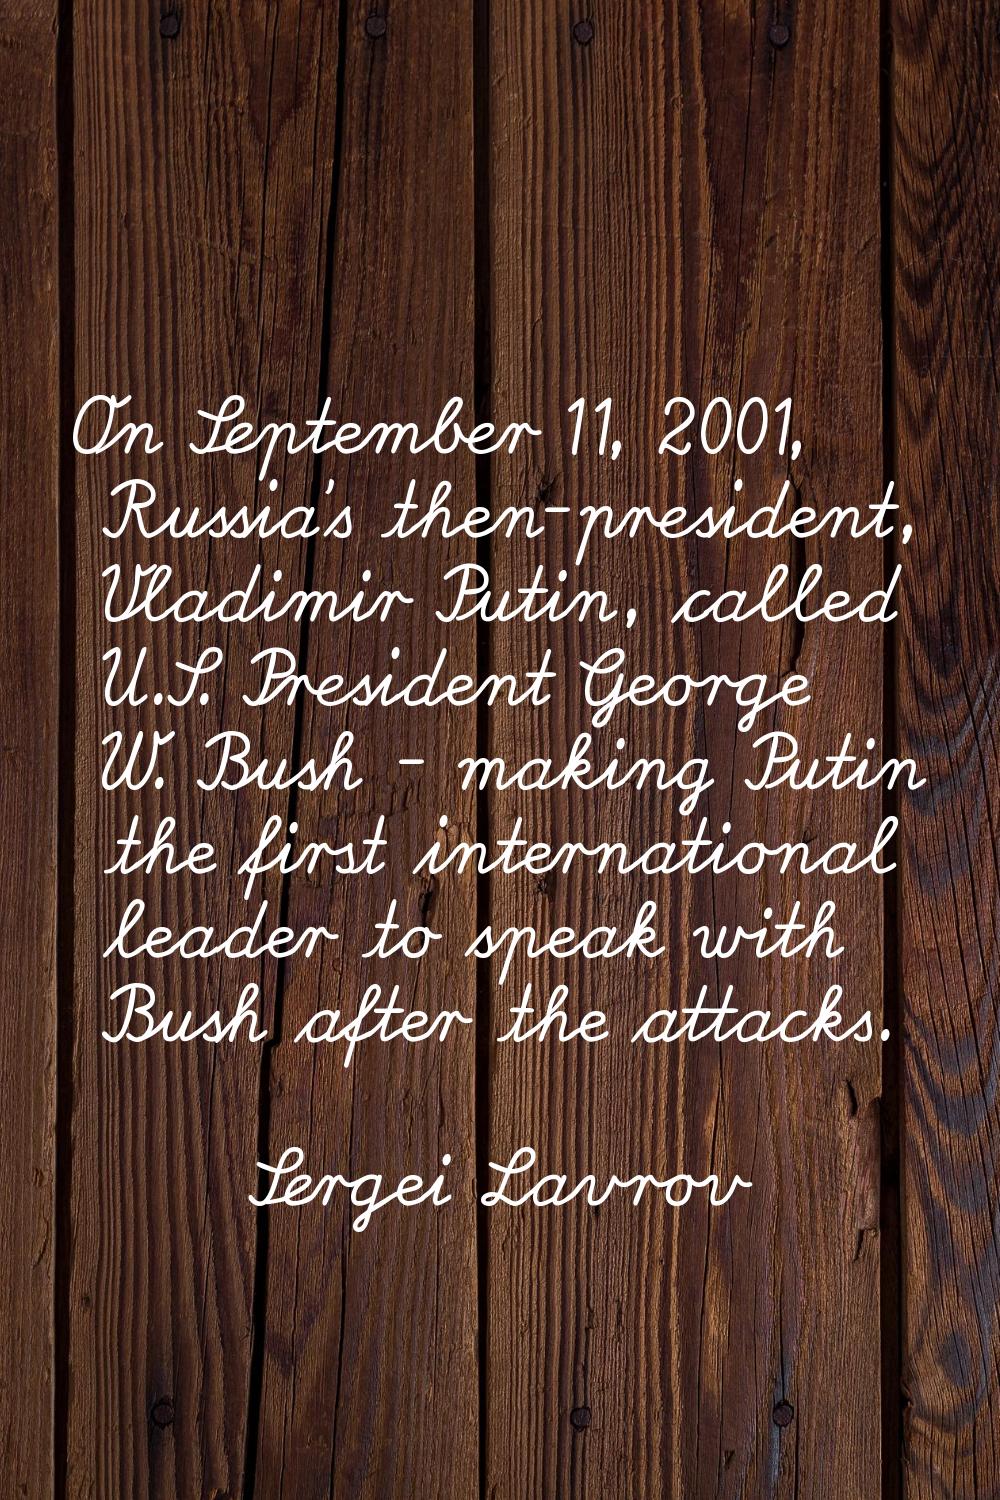 On September 11, 2001, Russia's then-president, Vladimir Putin, called U.S. President George W. Bus